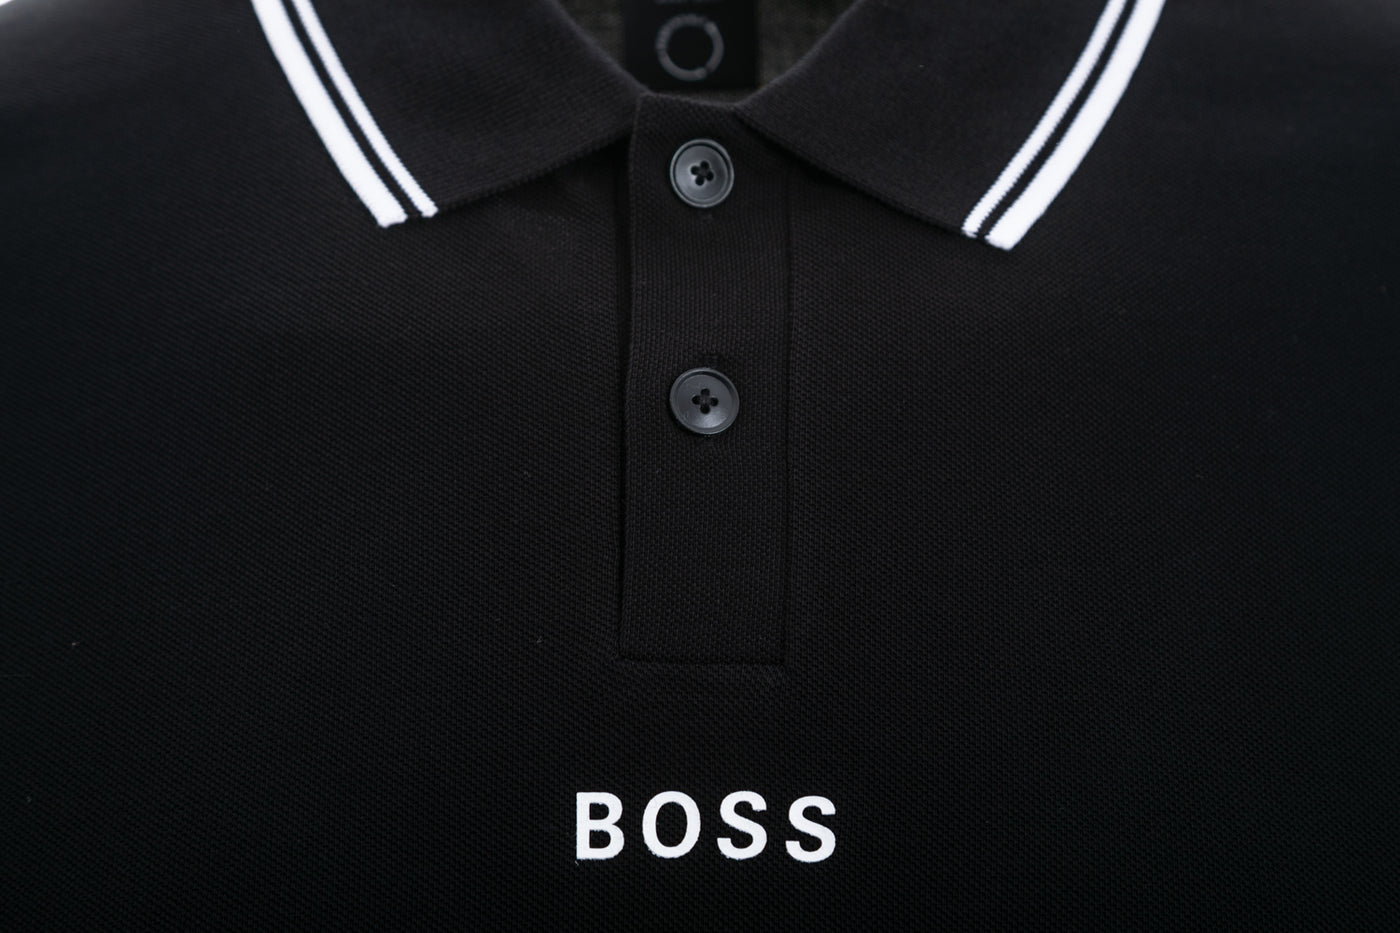 BOSS Pchup 1 Polo Shirt in Black Logo